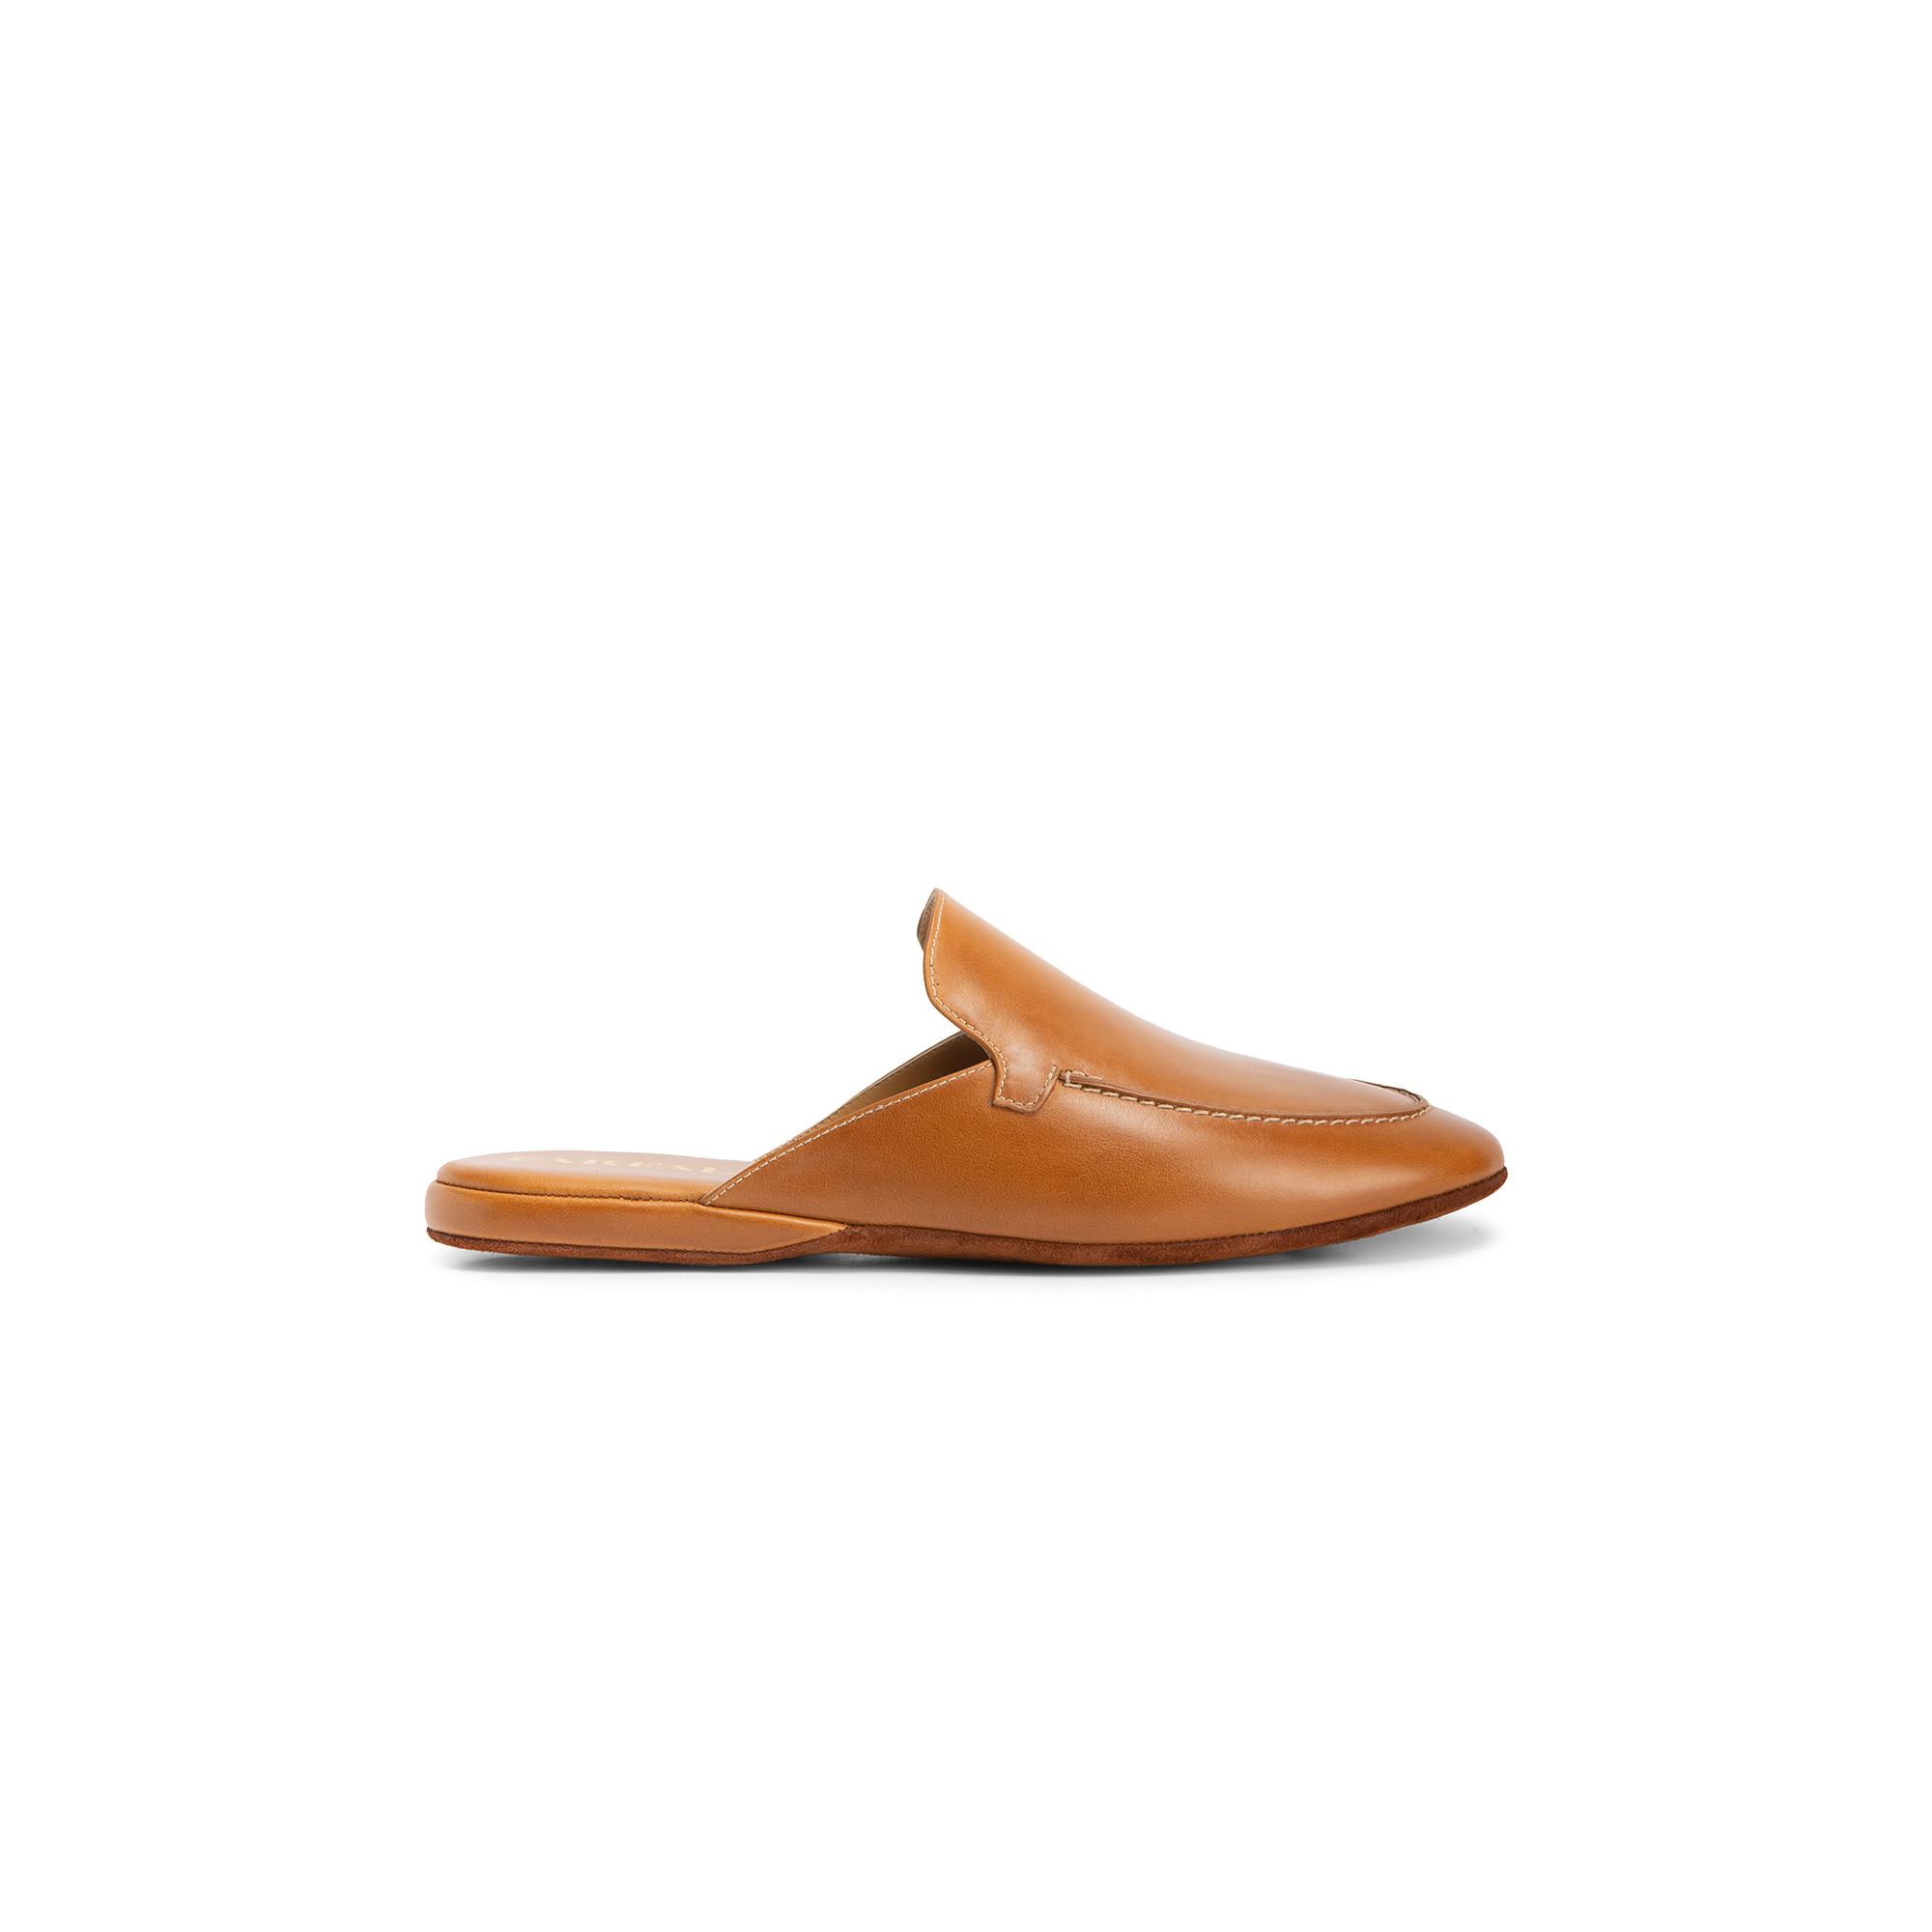 Classic indoor open tan calf leather slipper - Farfalla italian slippers